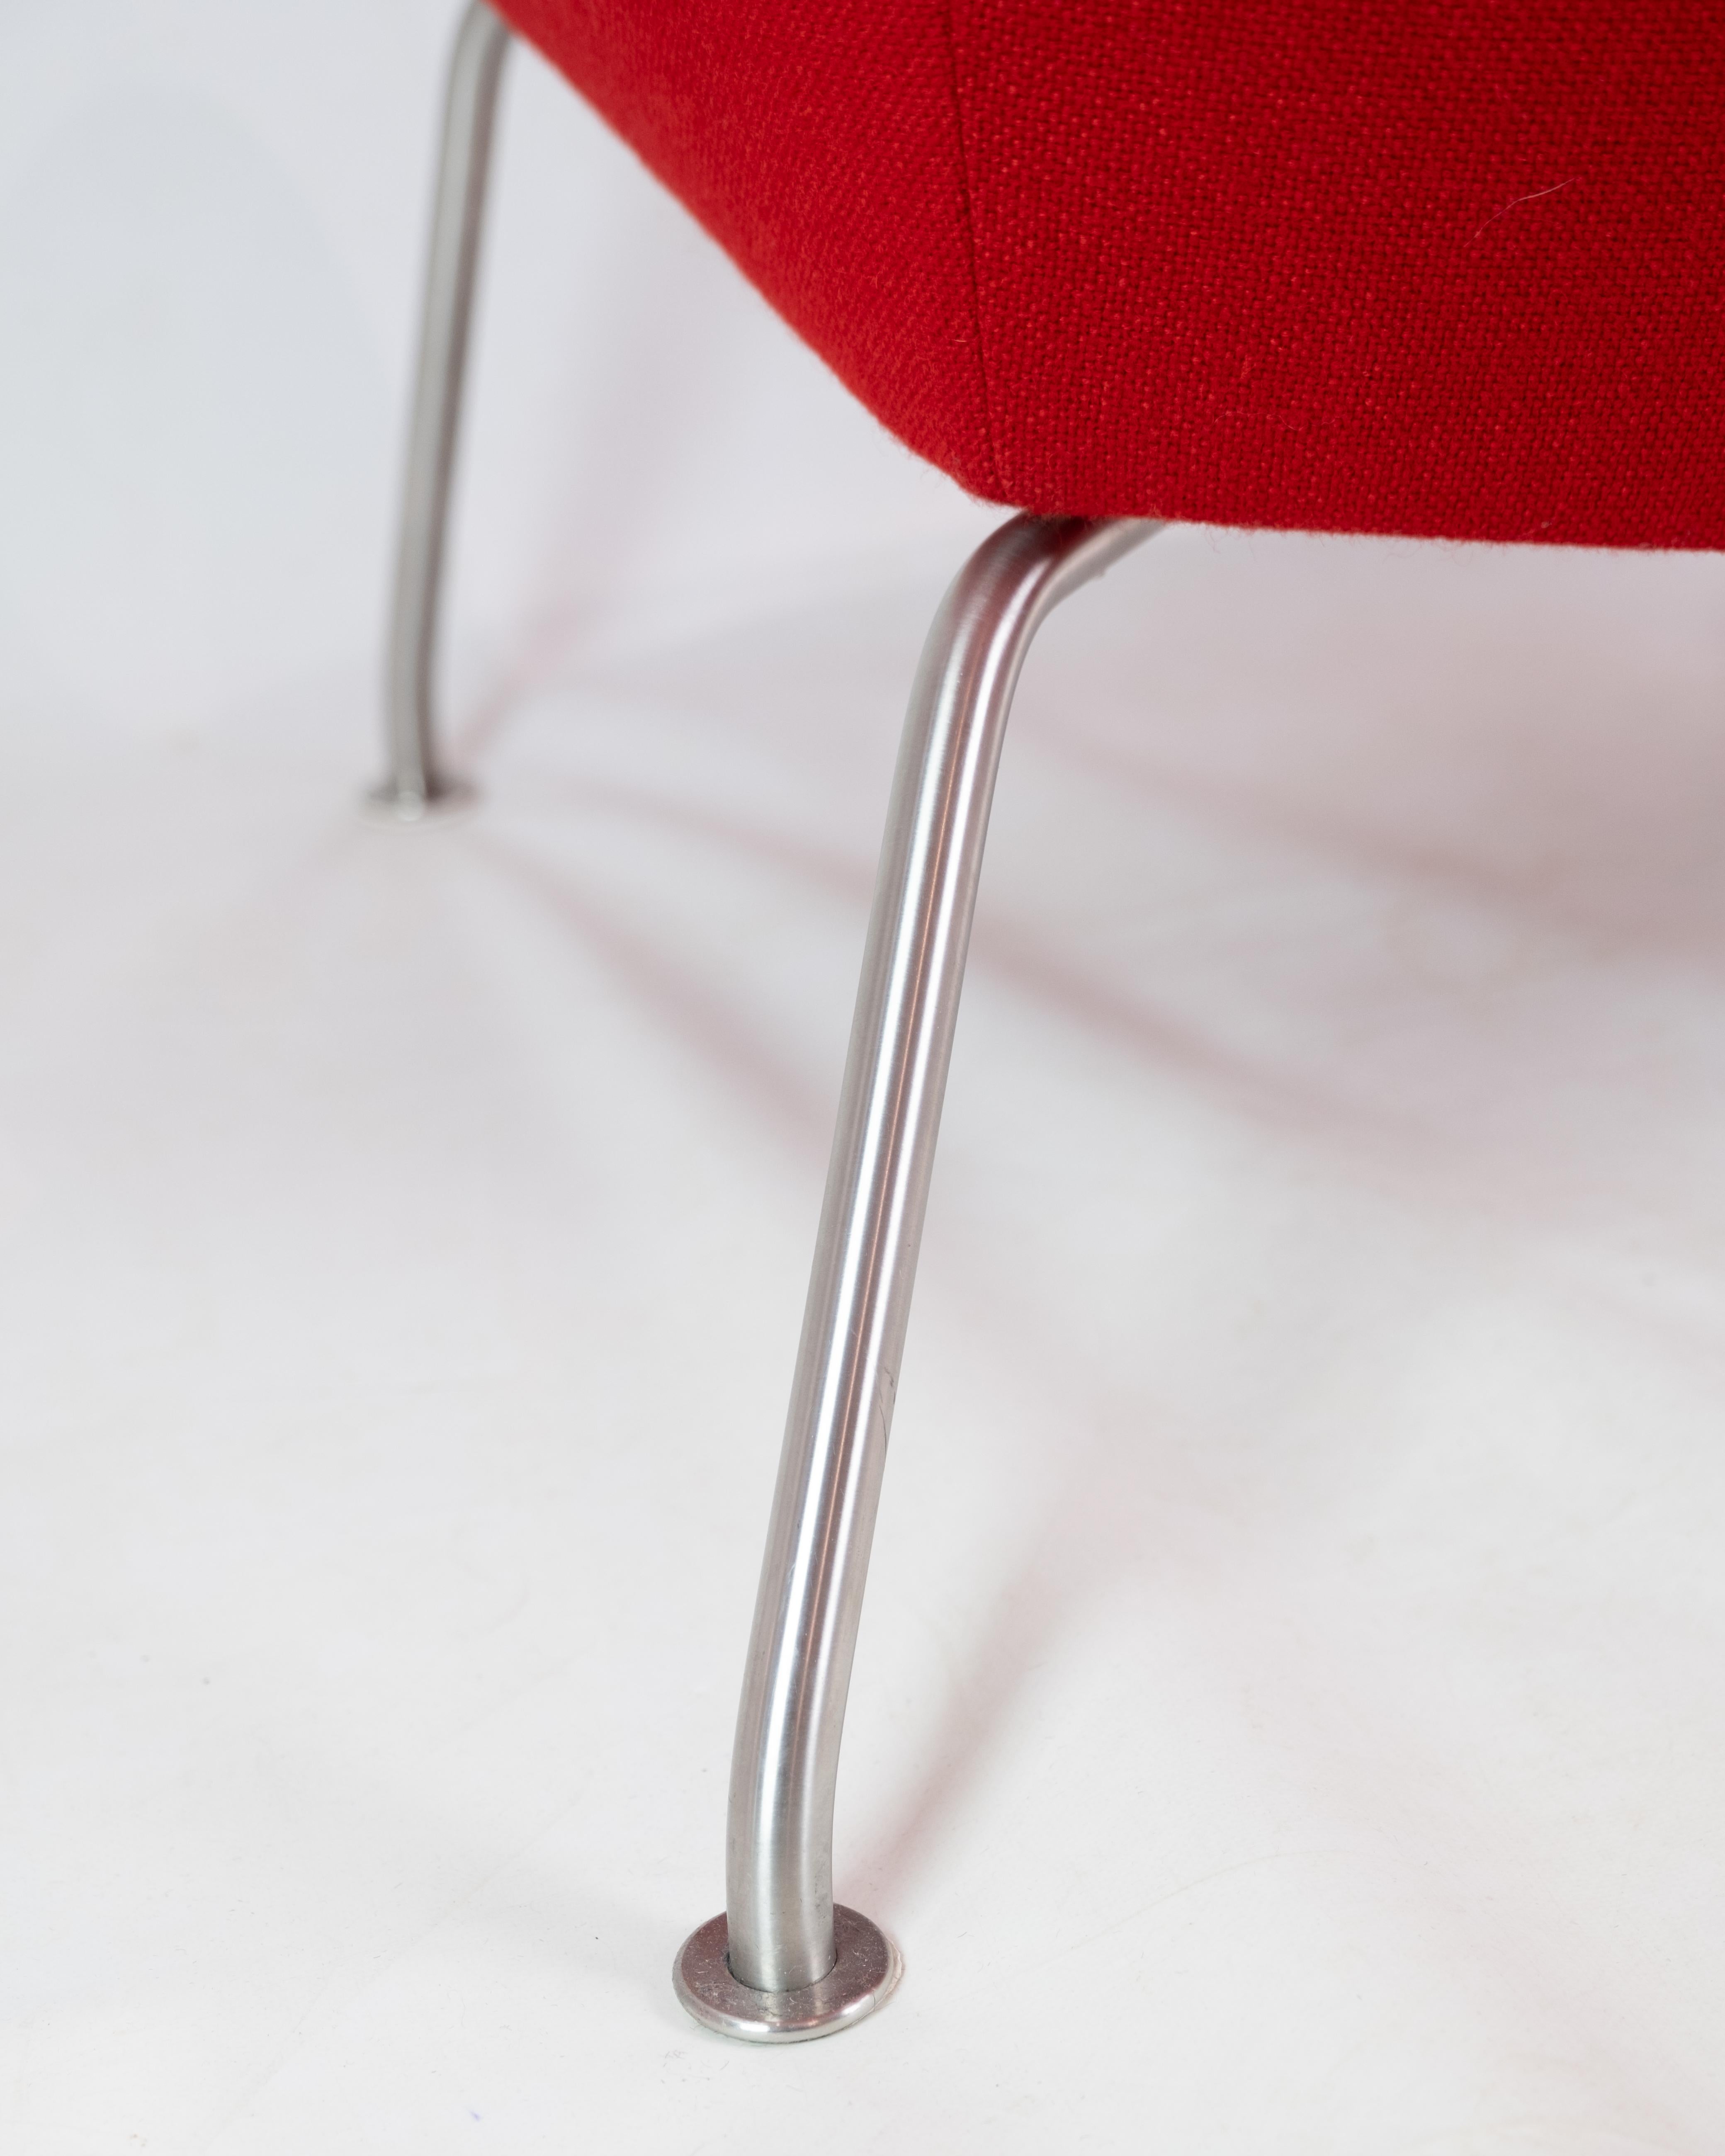 Oculus Chair in Red Hallingdal Fabric Designed By Hans J. Wegner  1